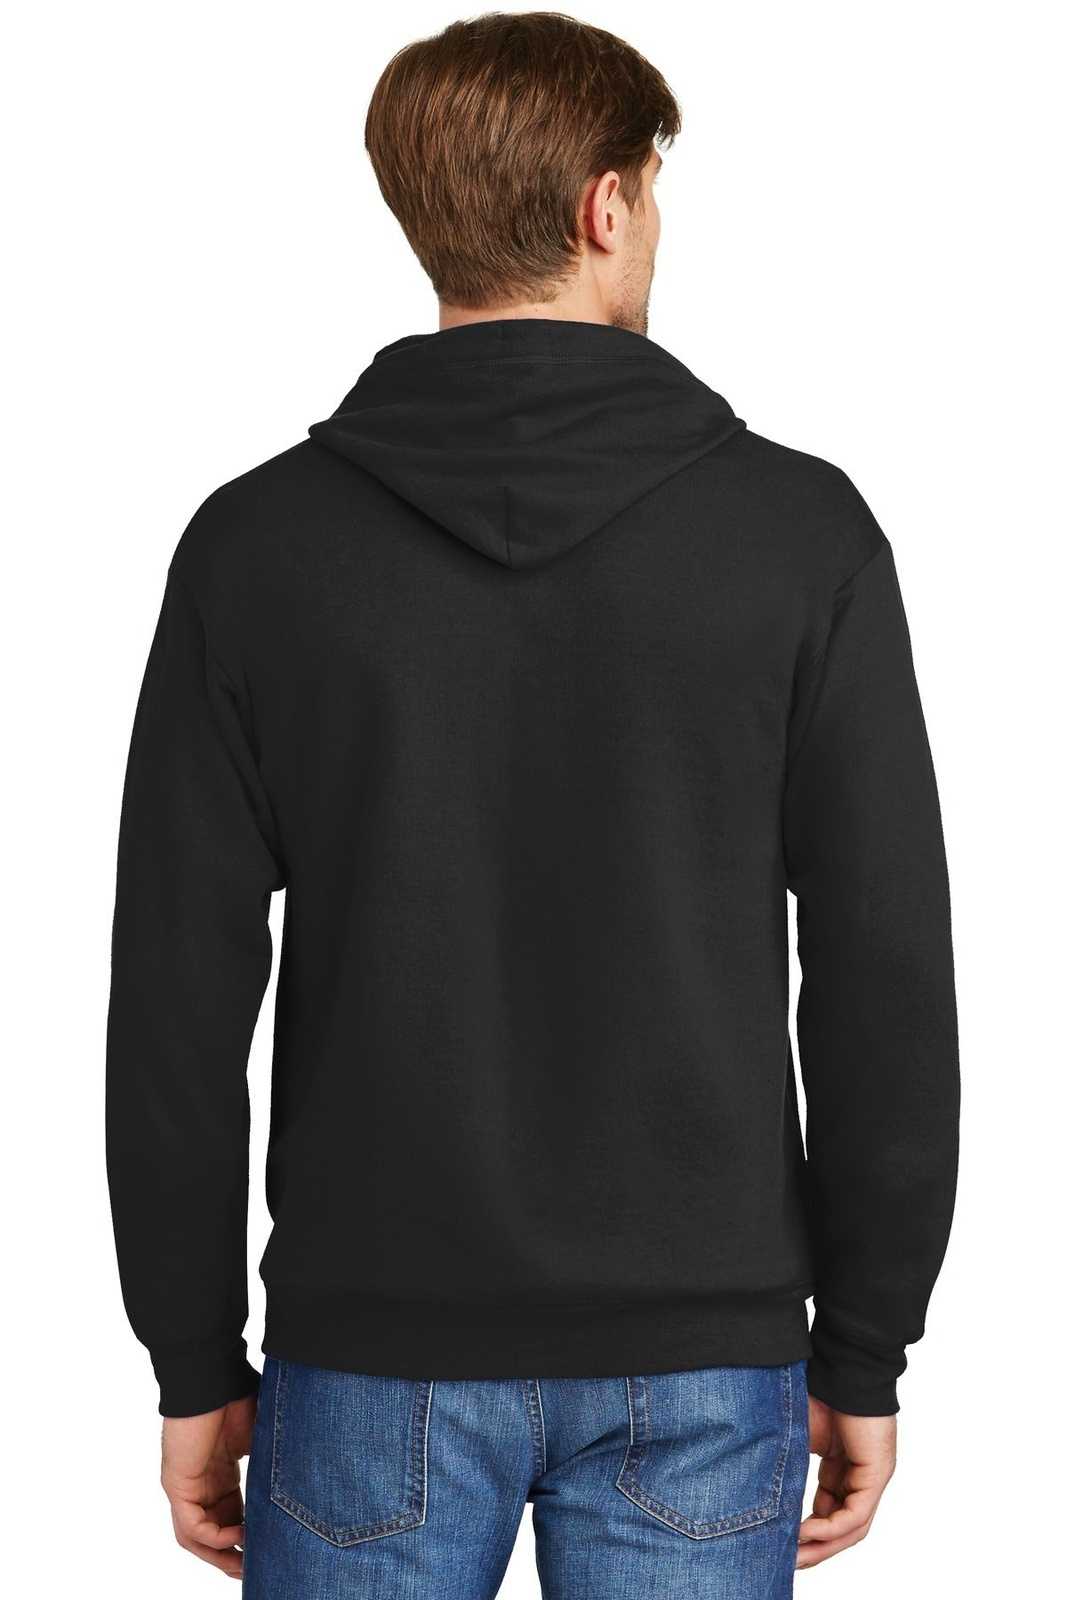 Hanes P180 Ecosmart Full-Zip Hooded Sweatshirt - Black - HIT a Double